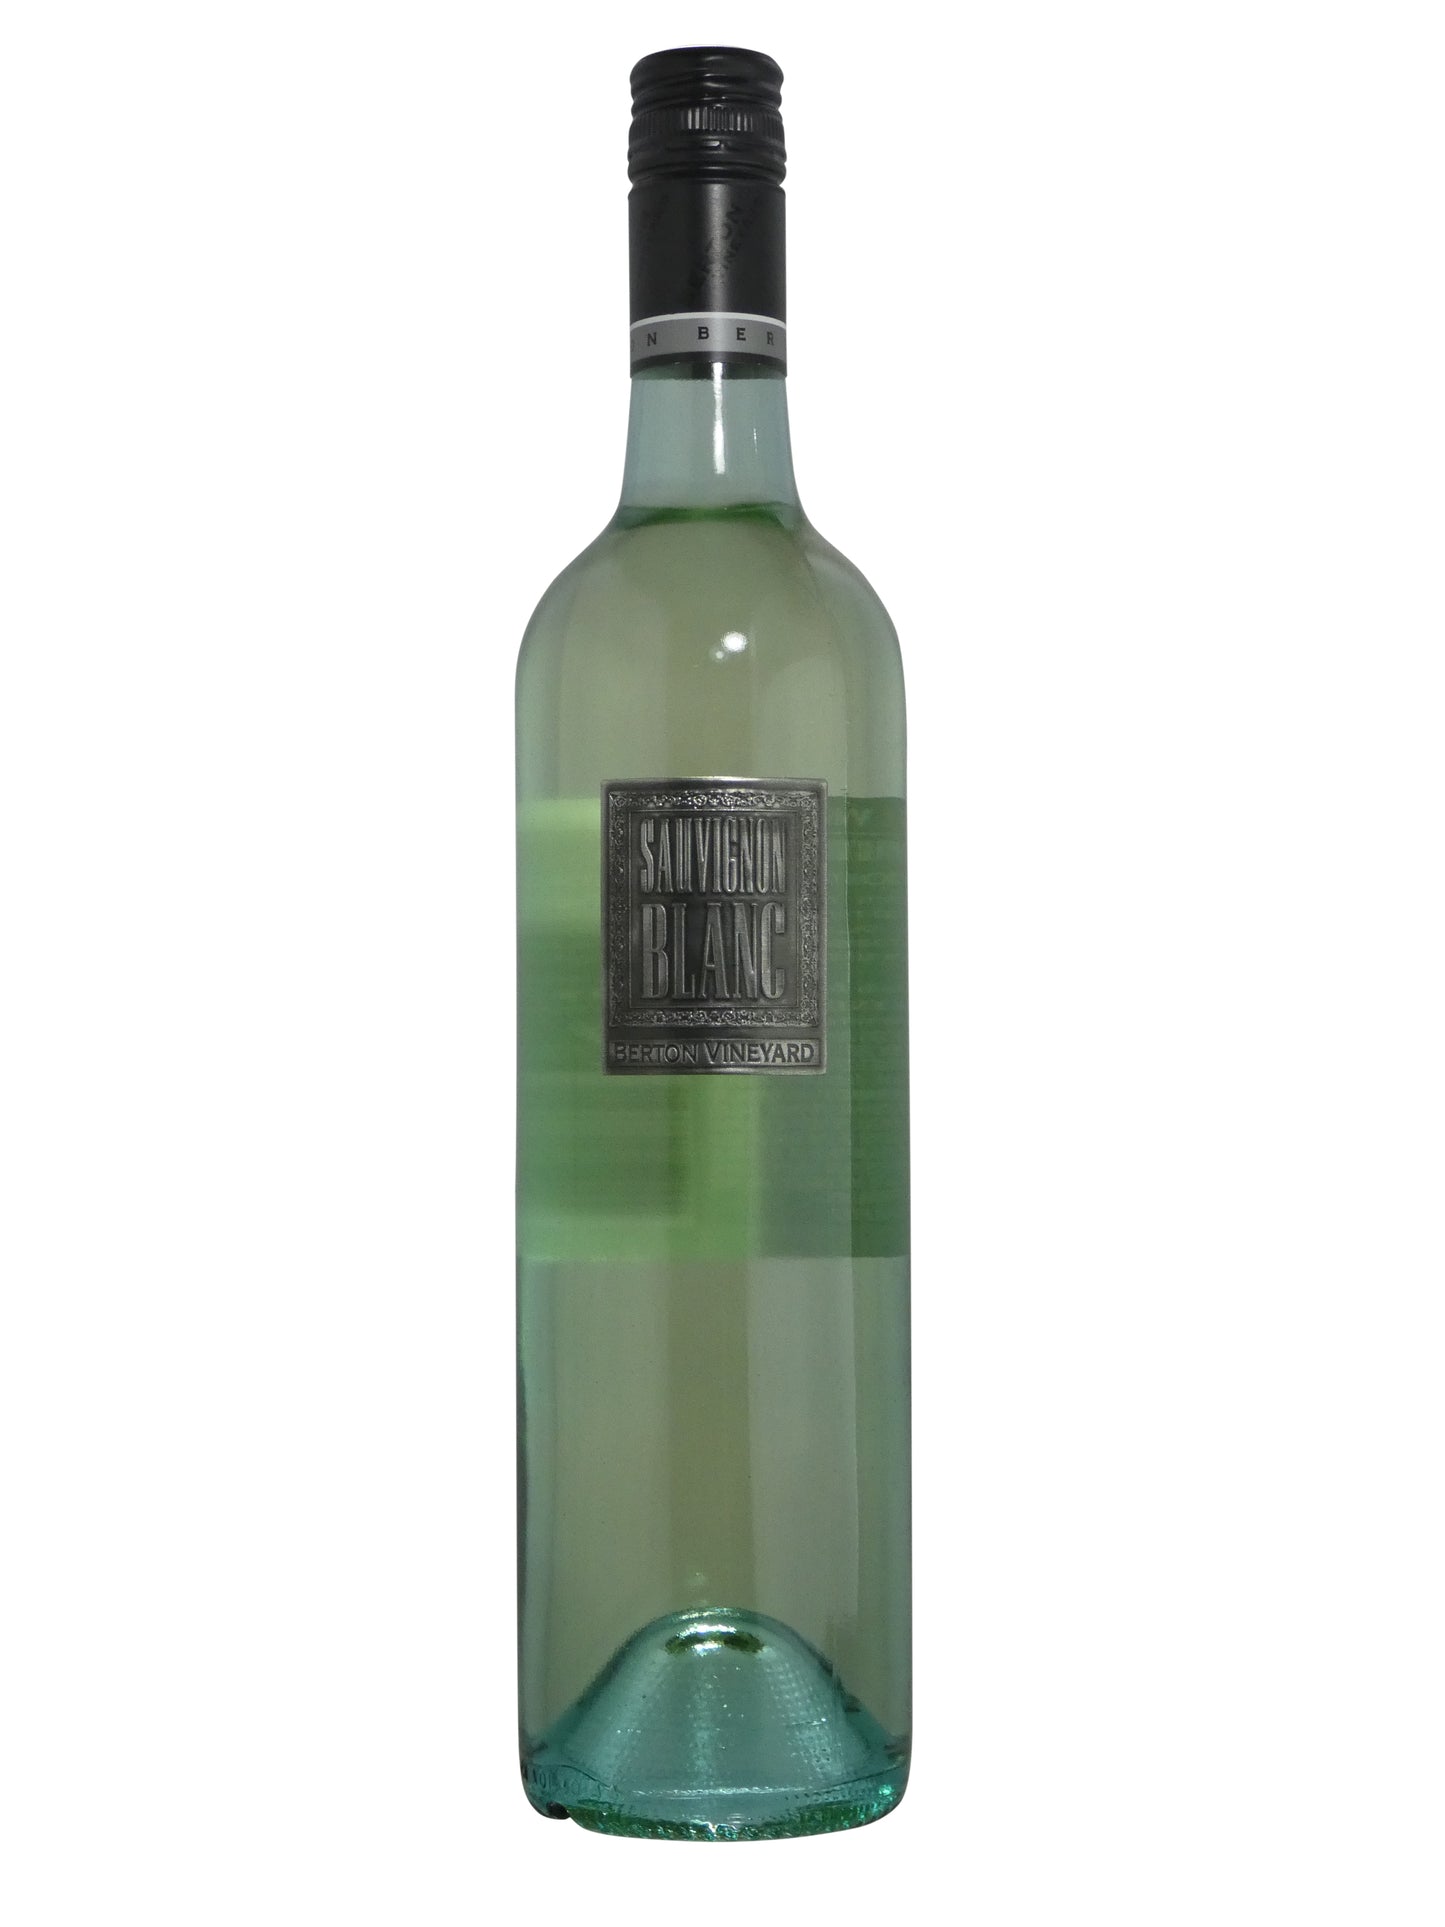 Berton Vineyard Sauvignon Blanc - 2020 (750ml)